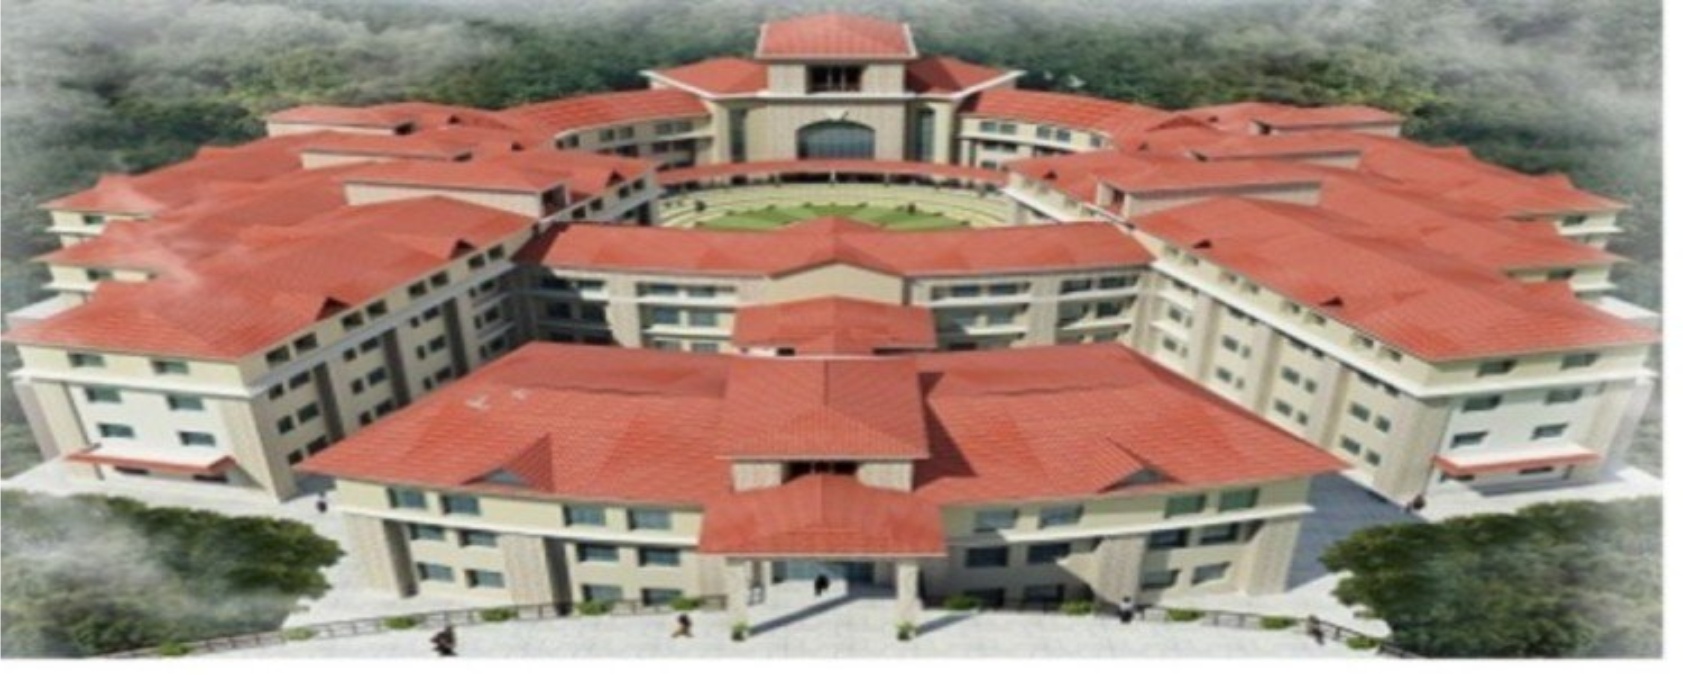 Govt. Medical College, Kathua